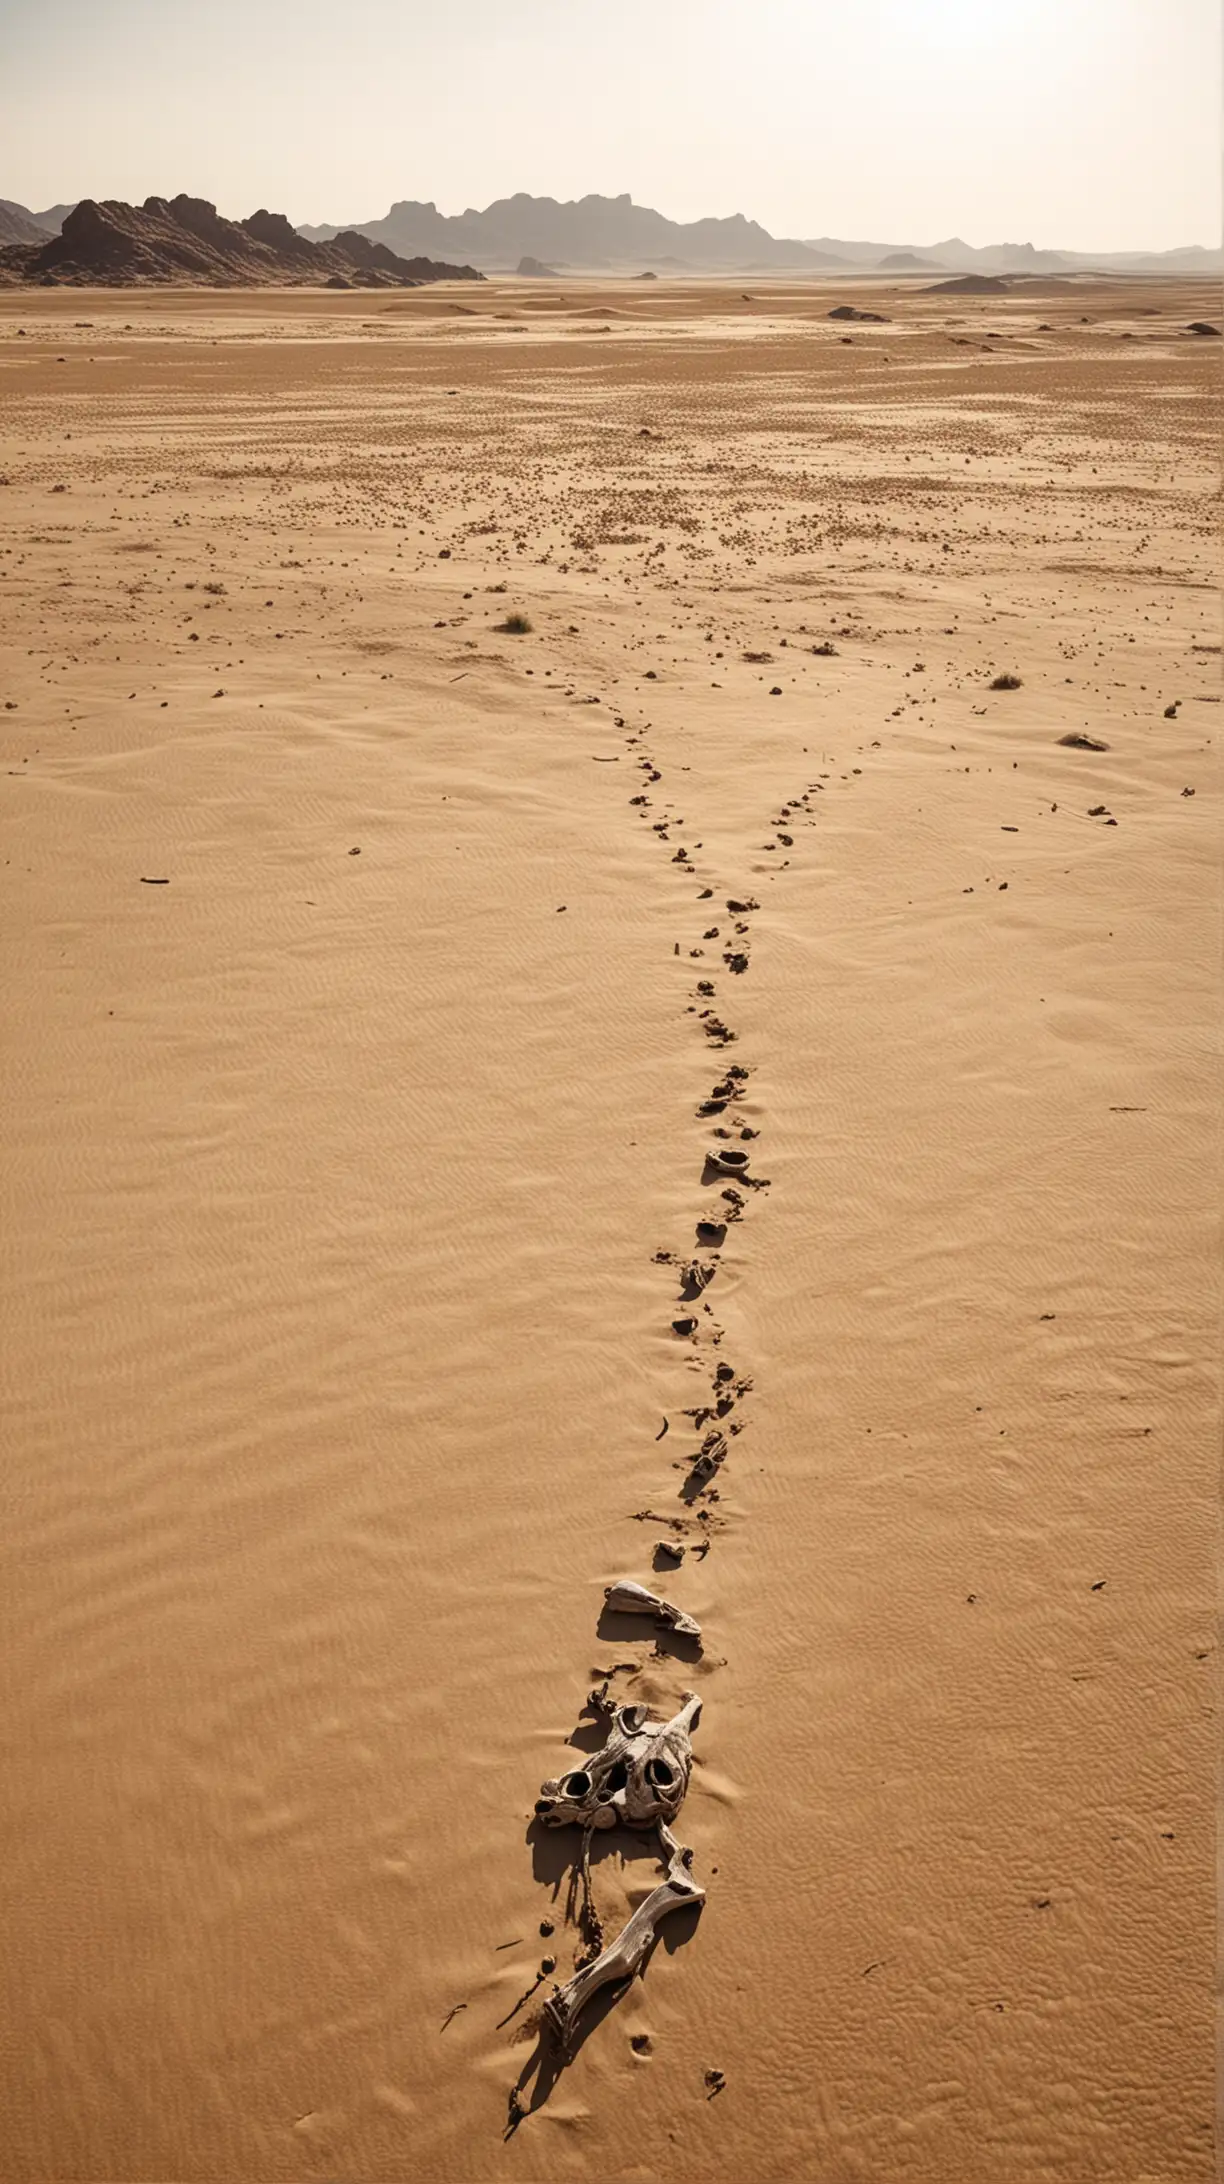 Harsh Desert Landscape with Scattered Human Remains